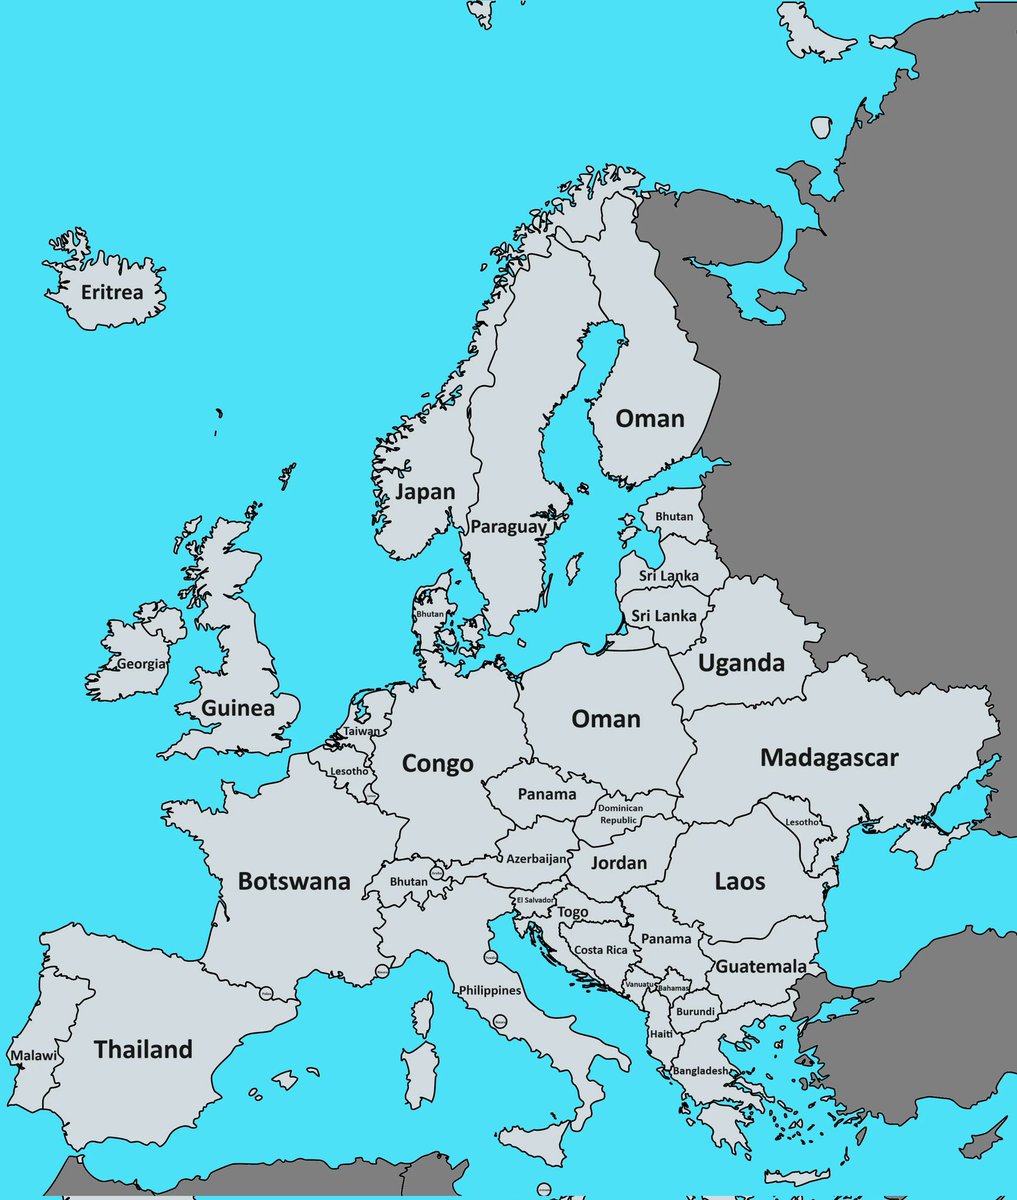 Non-European countries closest in land area to each European country